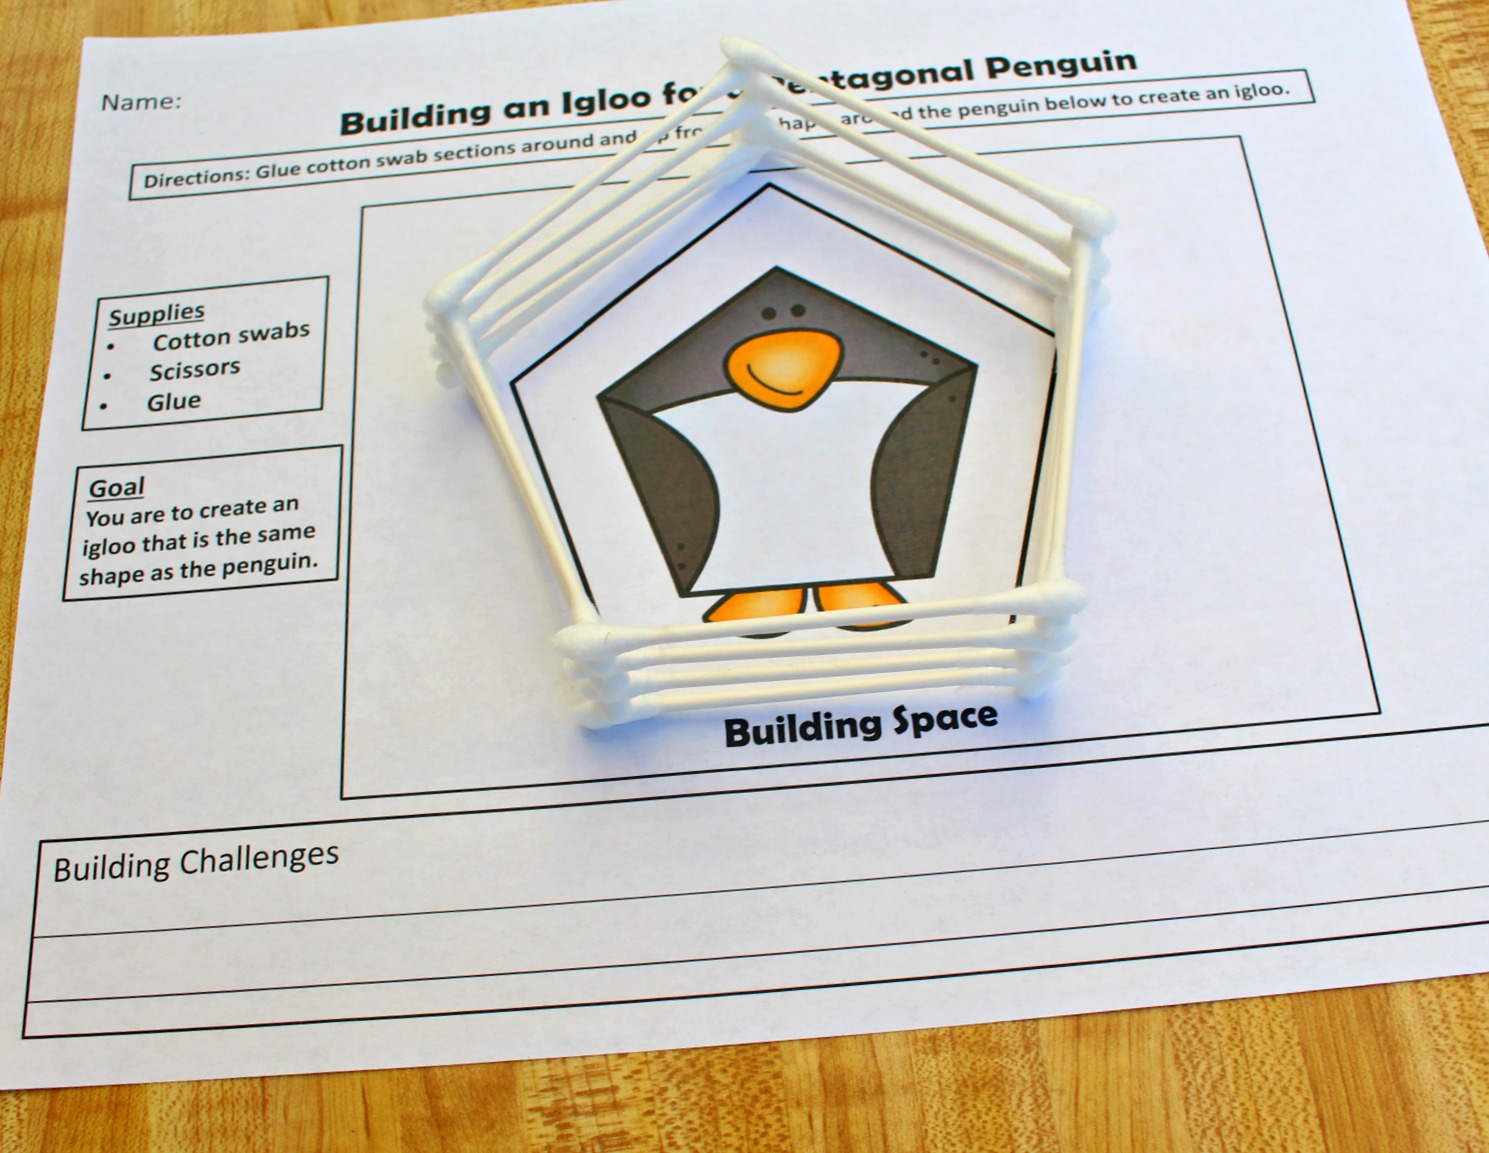 Building an Igloo for a Pentagon Penguin 